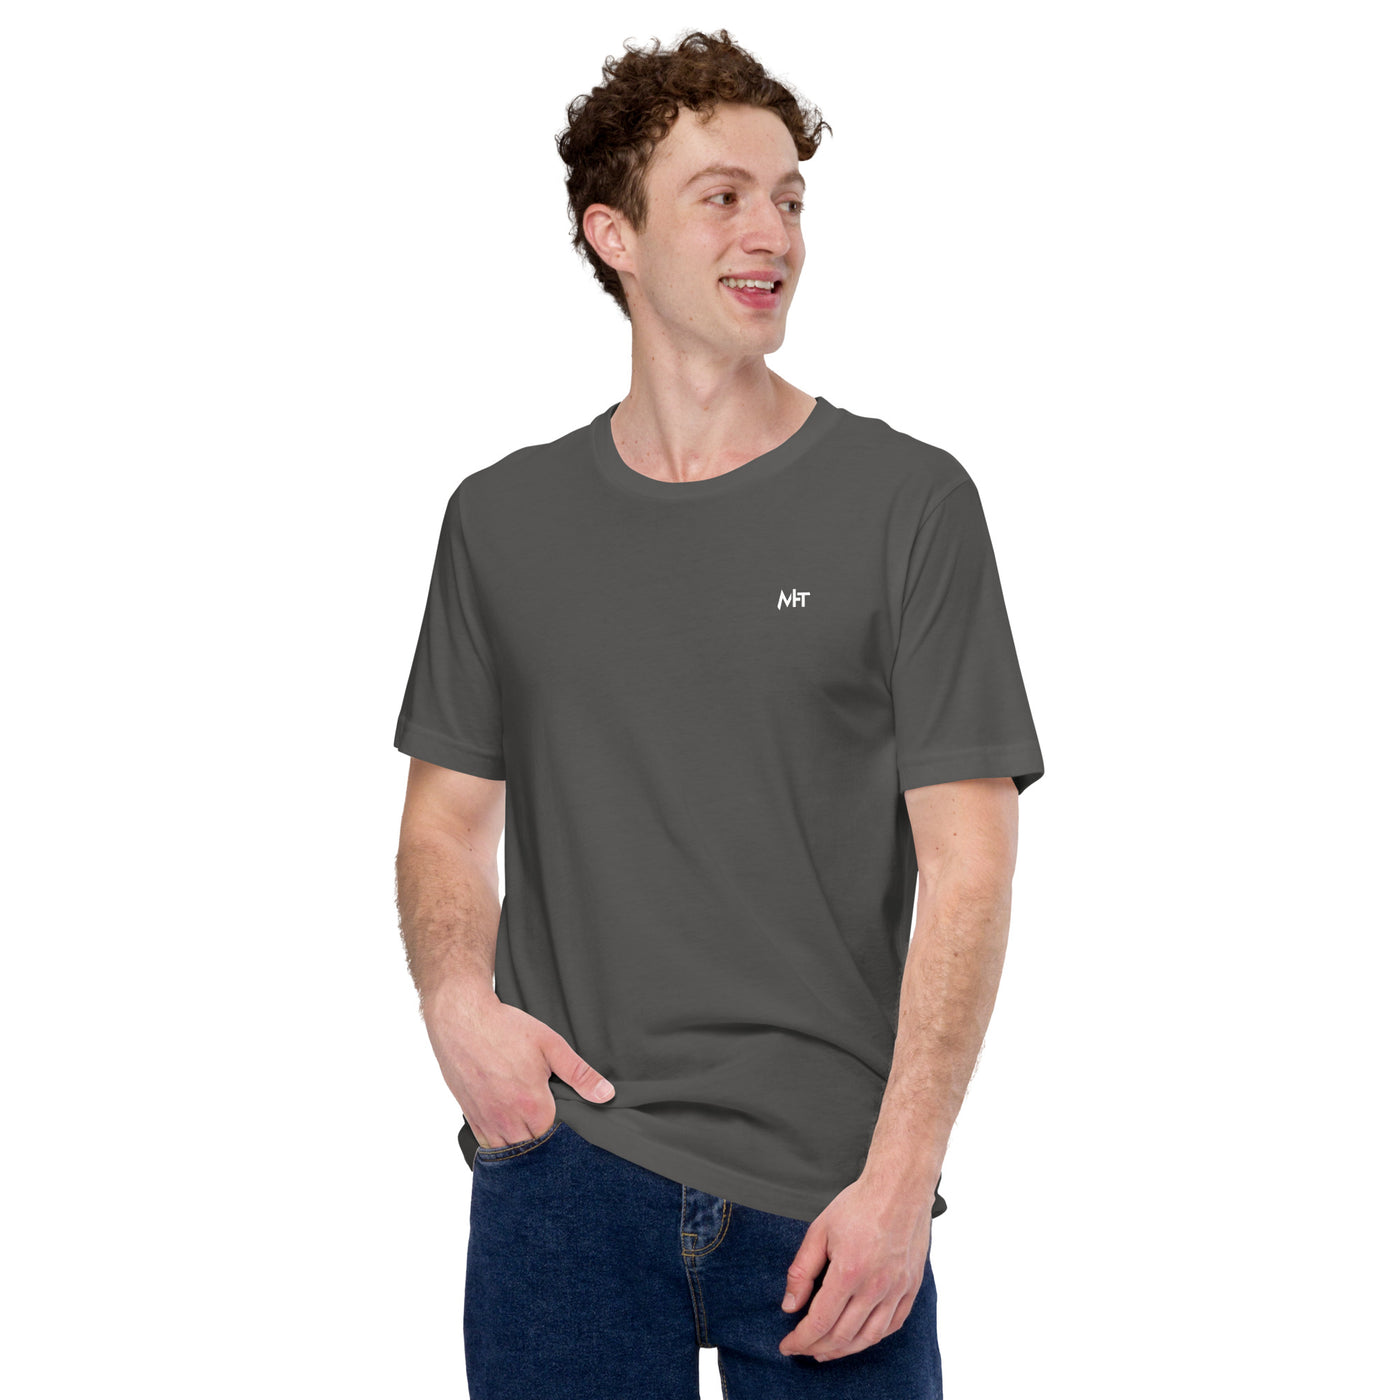 I Earn with Bitcoin - Unisex t-shirt  ( Back Print )